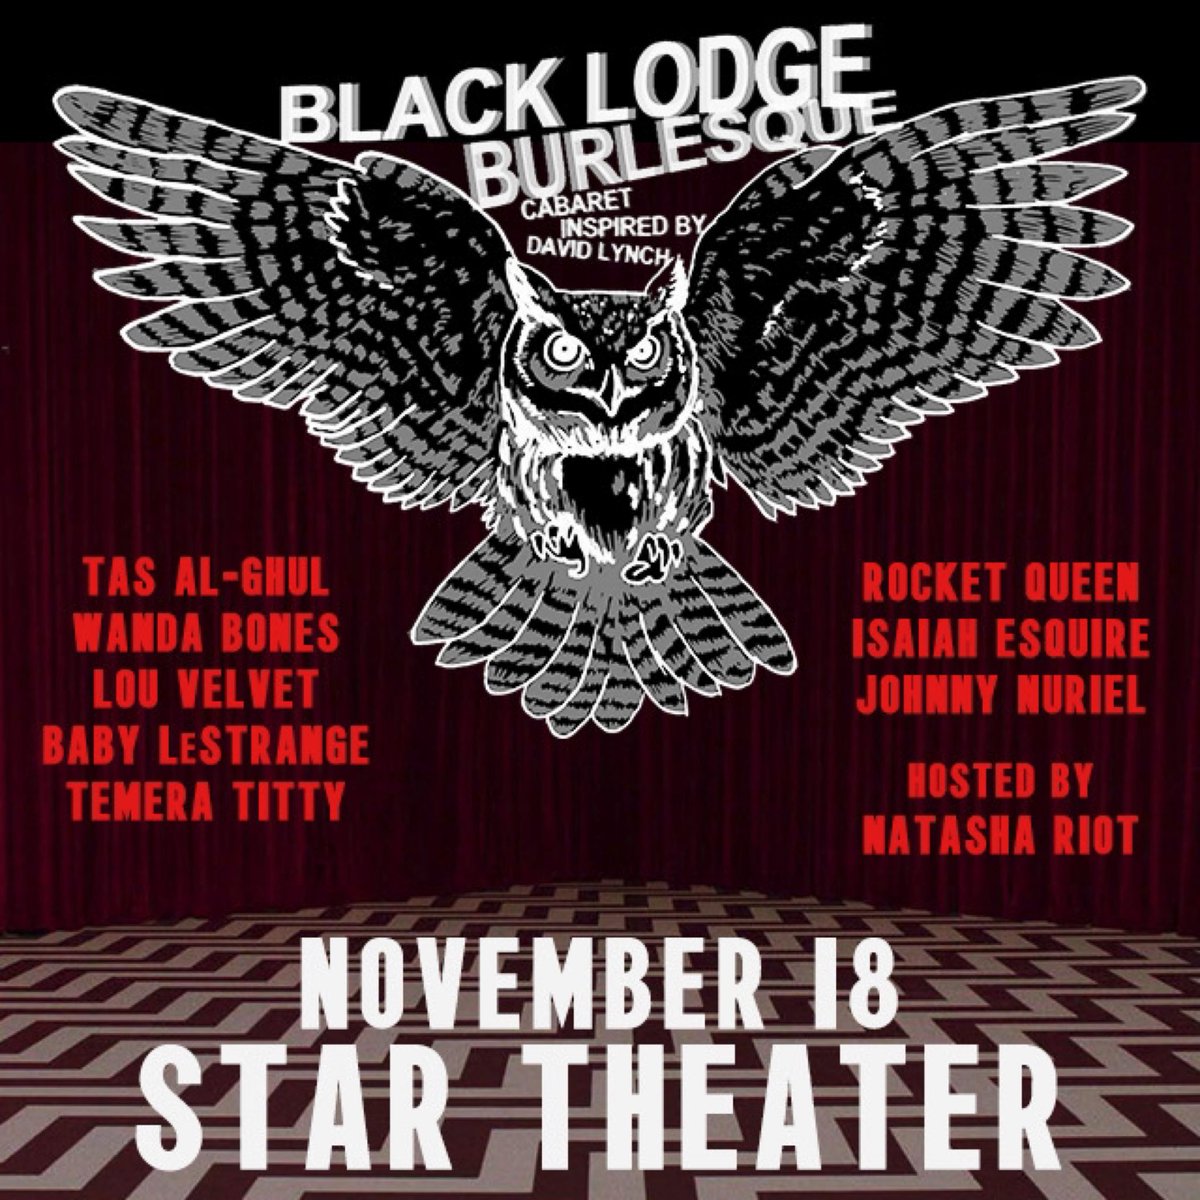 Link in bio for tickets to Black Lodge Burlesque on November 18 @StarTheaterPDX #portland #portlandevents #pdx #davidlynch #blacklodge #twinpeaks #pdxpipipeline